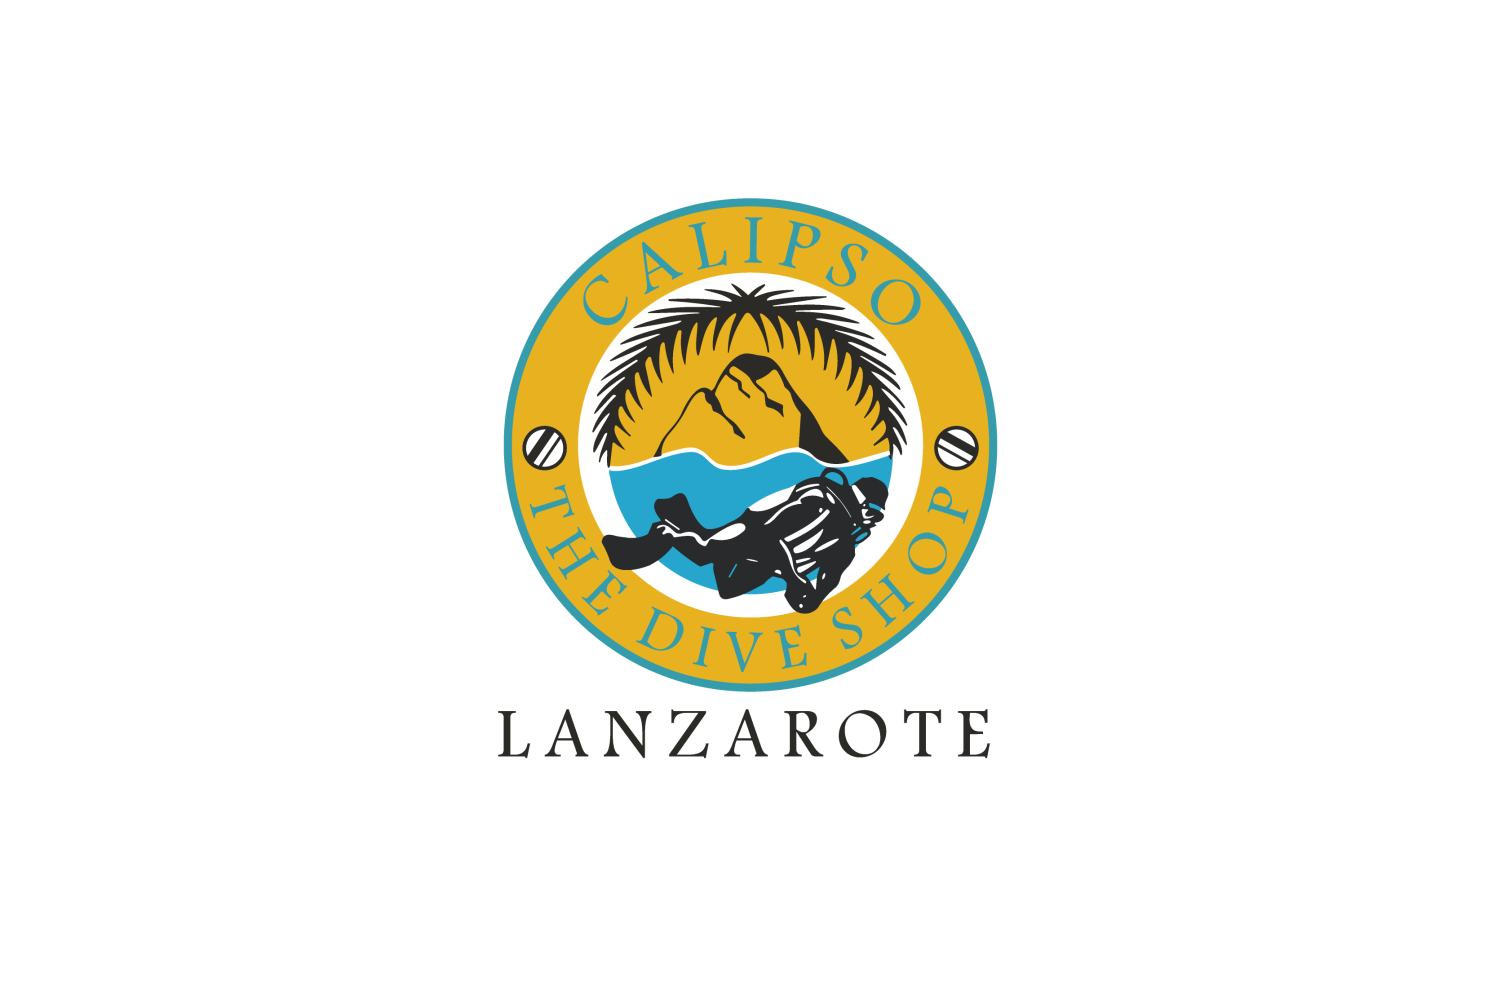 Calipso The Dive Shop Lanzarote